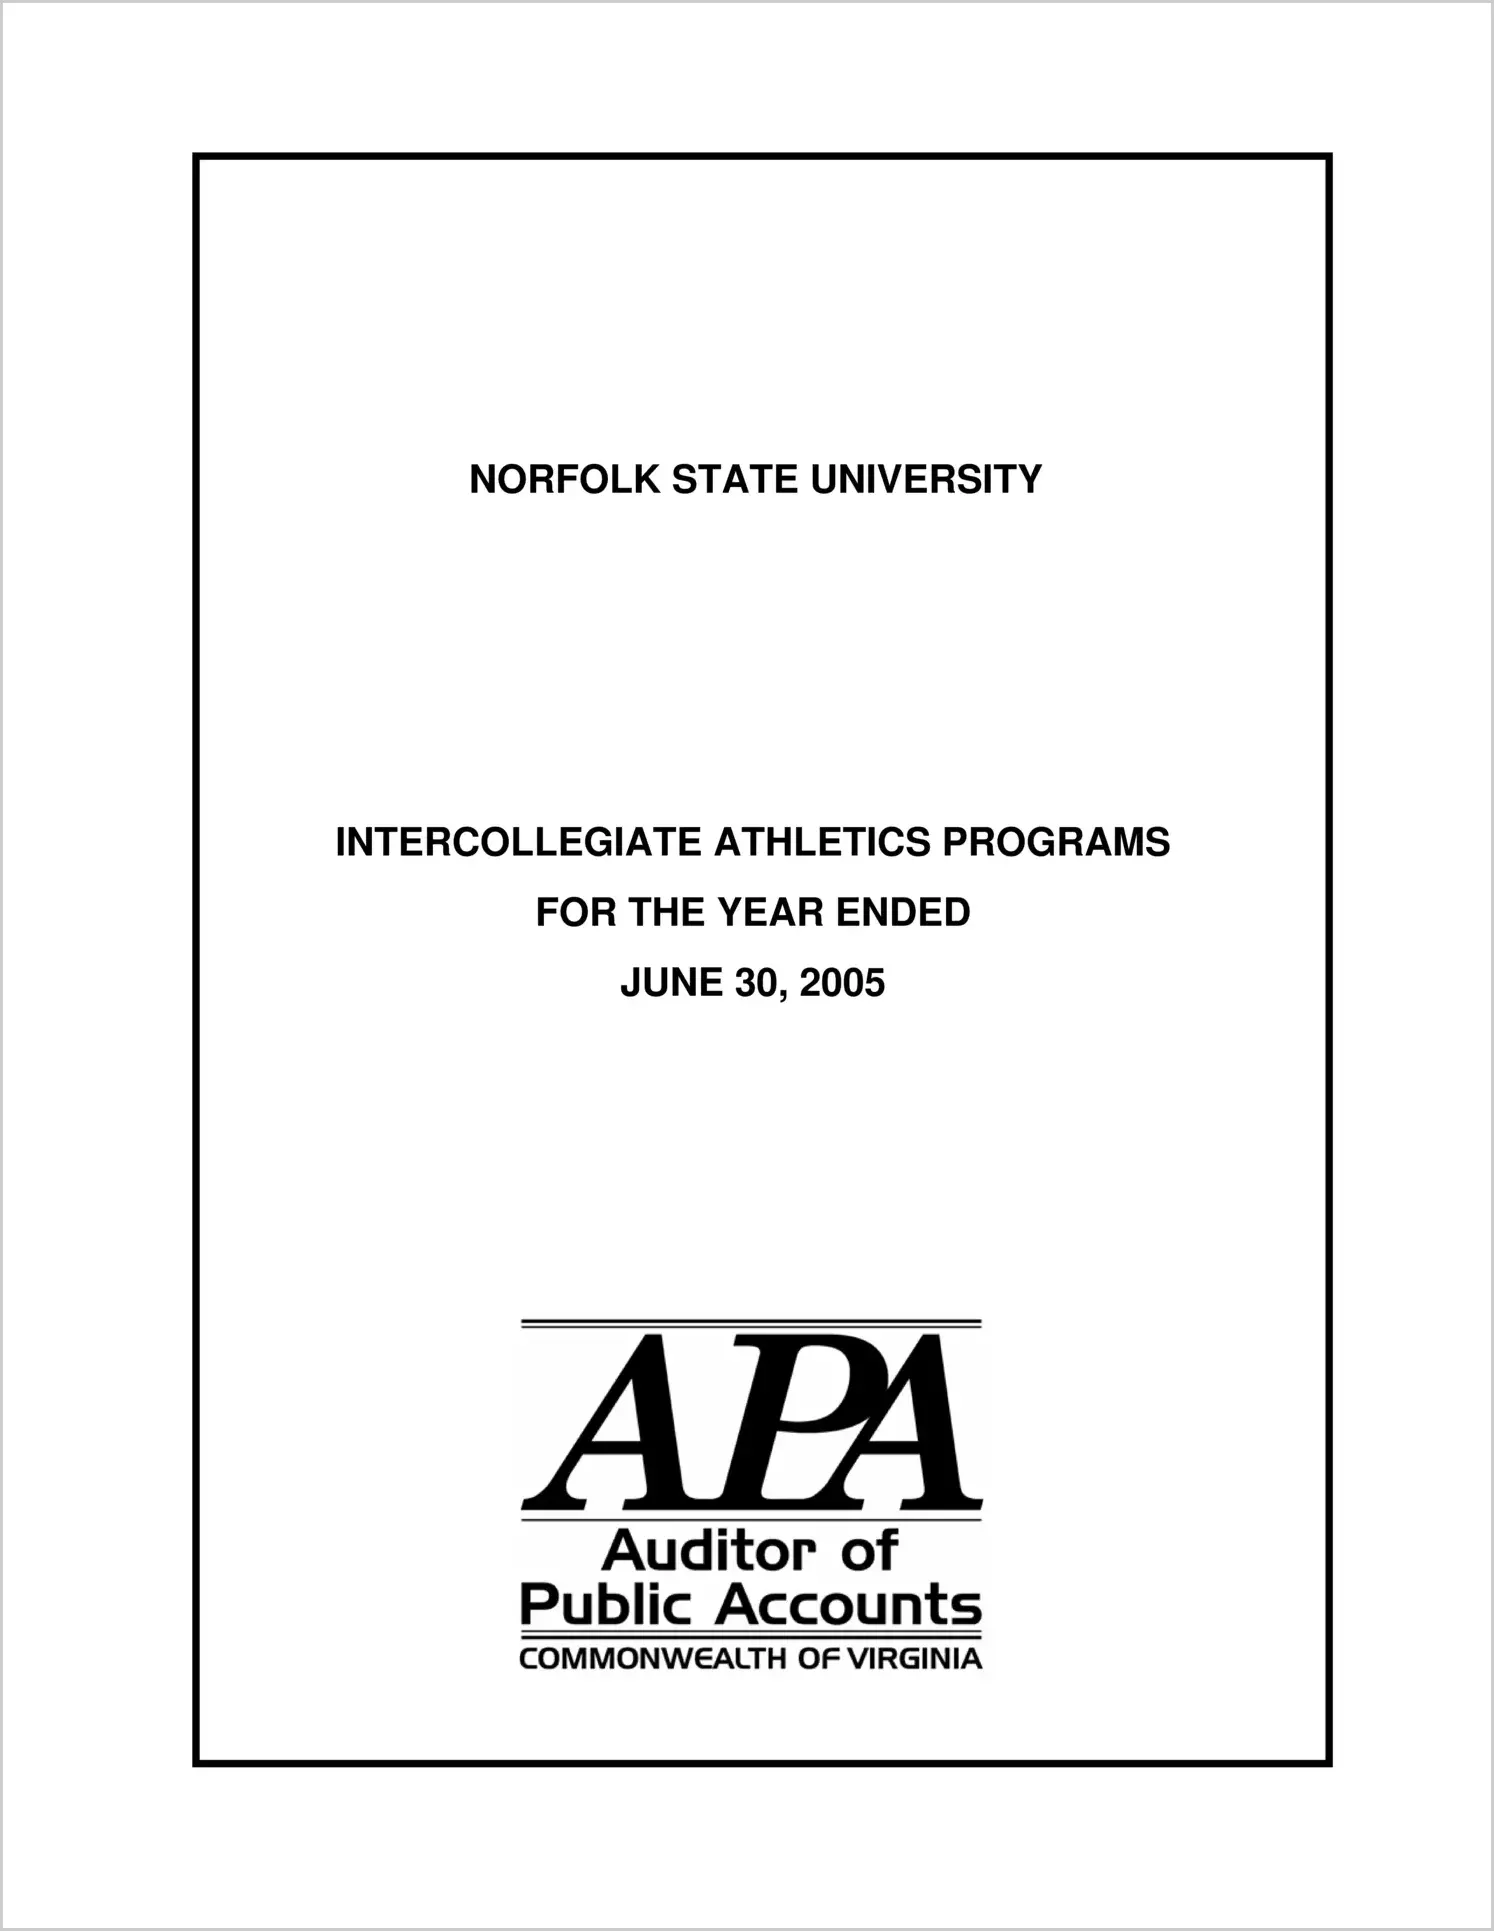 Norfolk State University Intercollegiate Athletics Programs for the year ended June 30, 2005